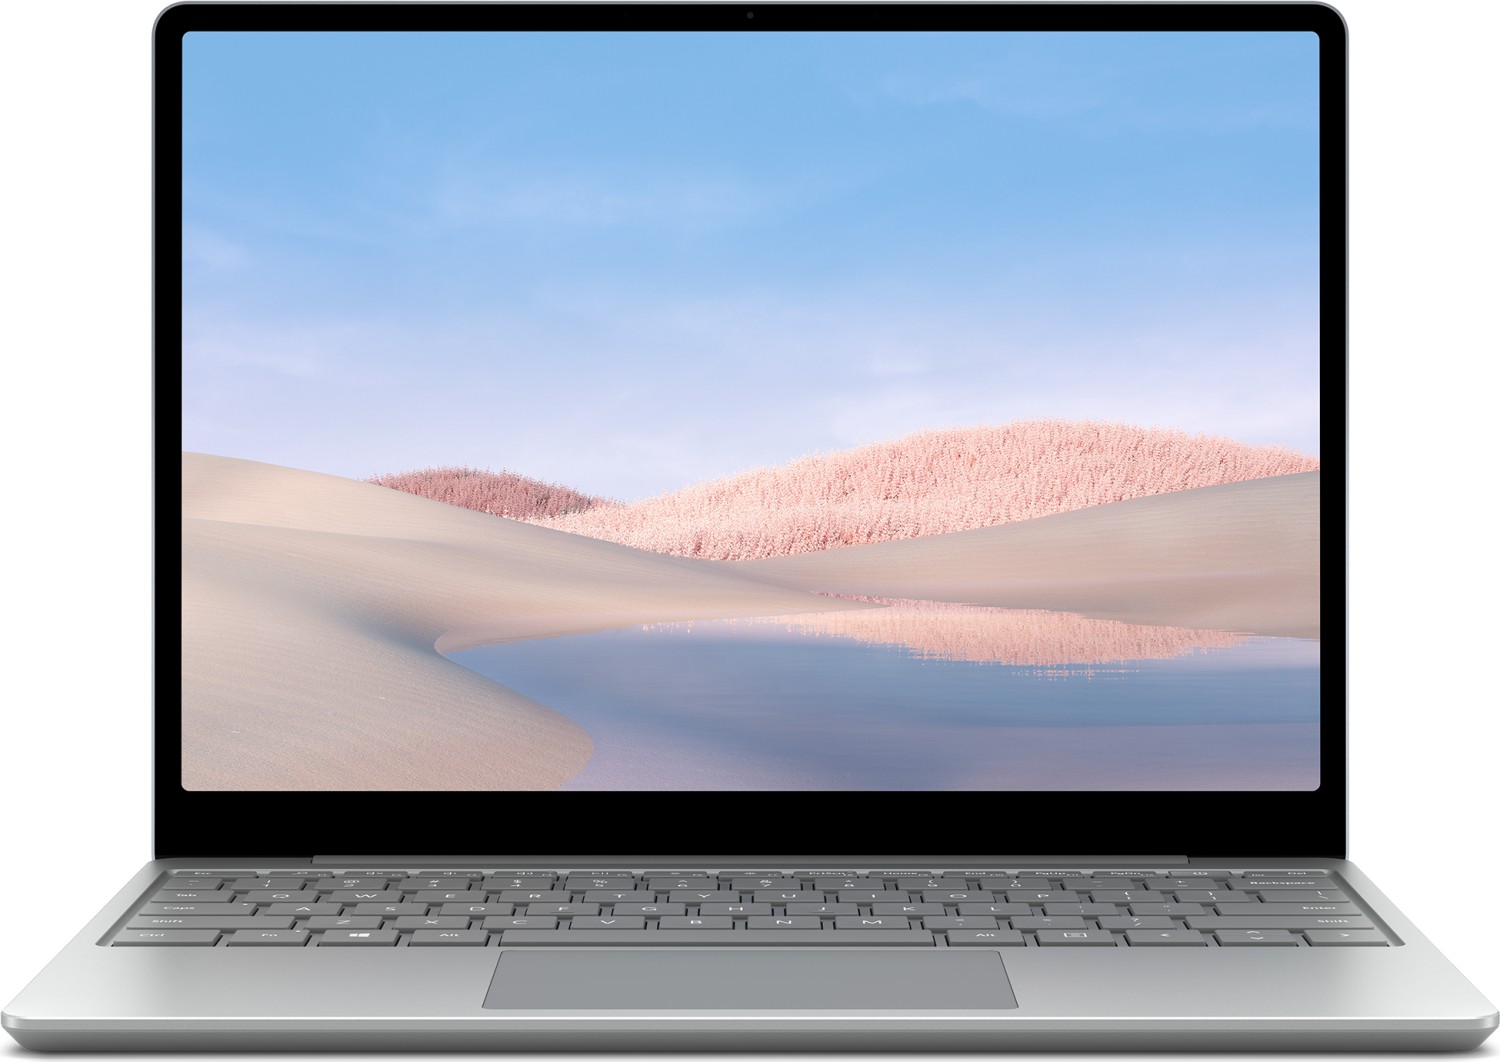 Microsoft Surface Laptop Go Core i5 1035G1 1 GHz Win 10 Pro 8 GB RAM 256 GB SSD 31.5 cm (12.4) Touchscreen 1536 x 1024 UHD Graphics Bluetooth, Wi Fi Platin kbd Deutsch kommerziell  - Onlineshop JACOB Elektronik